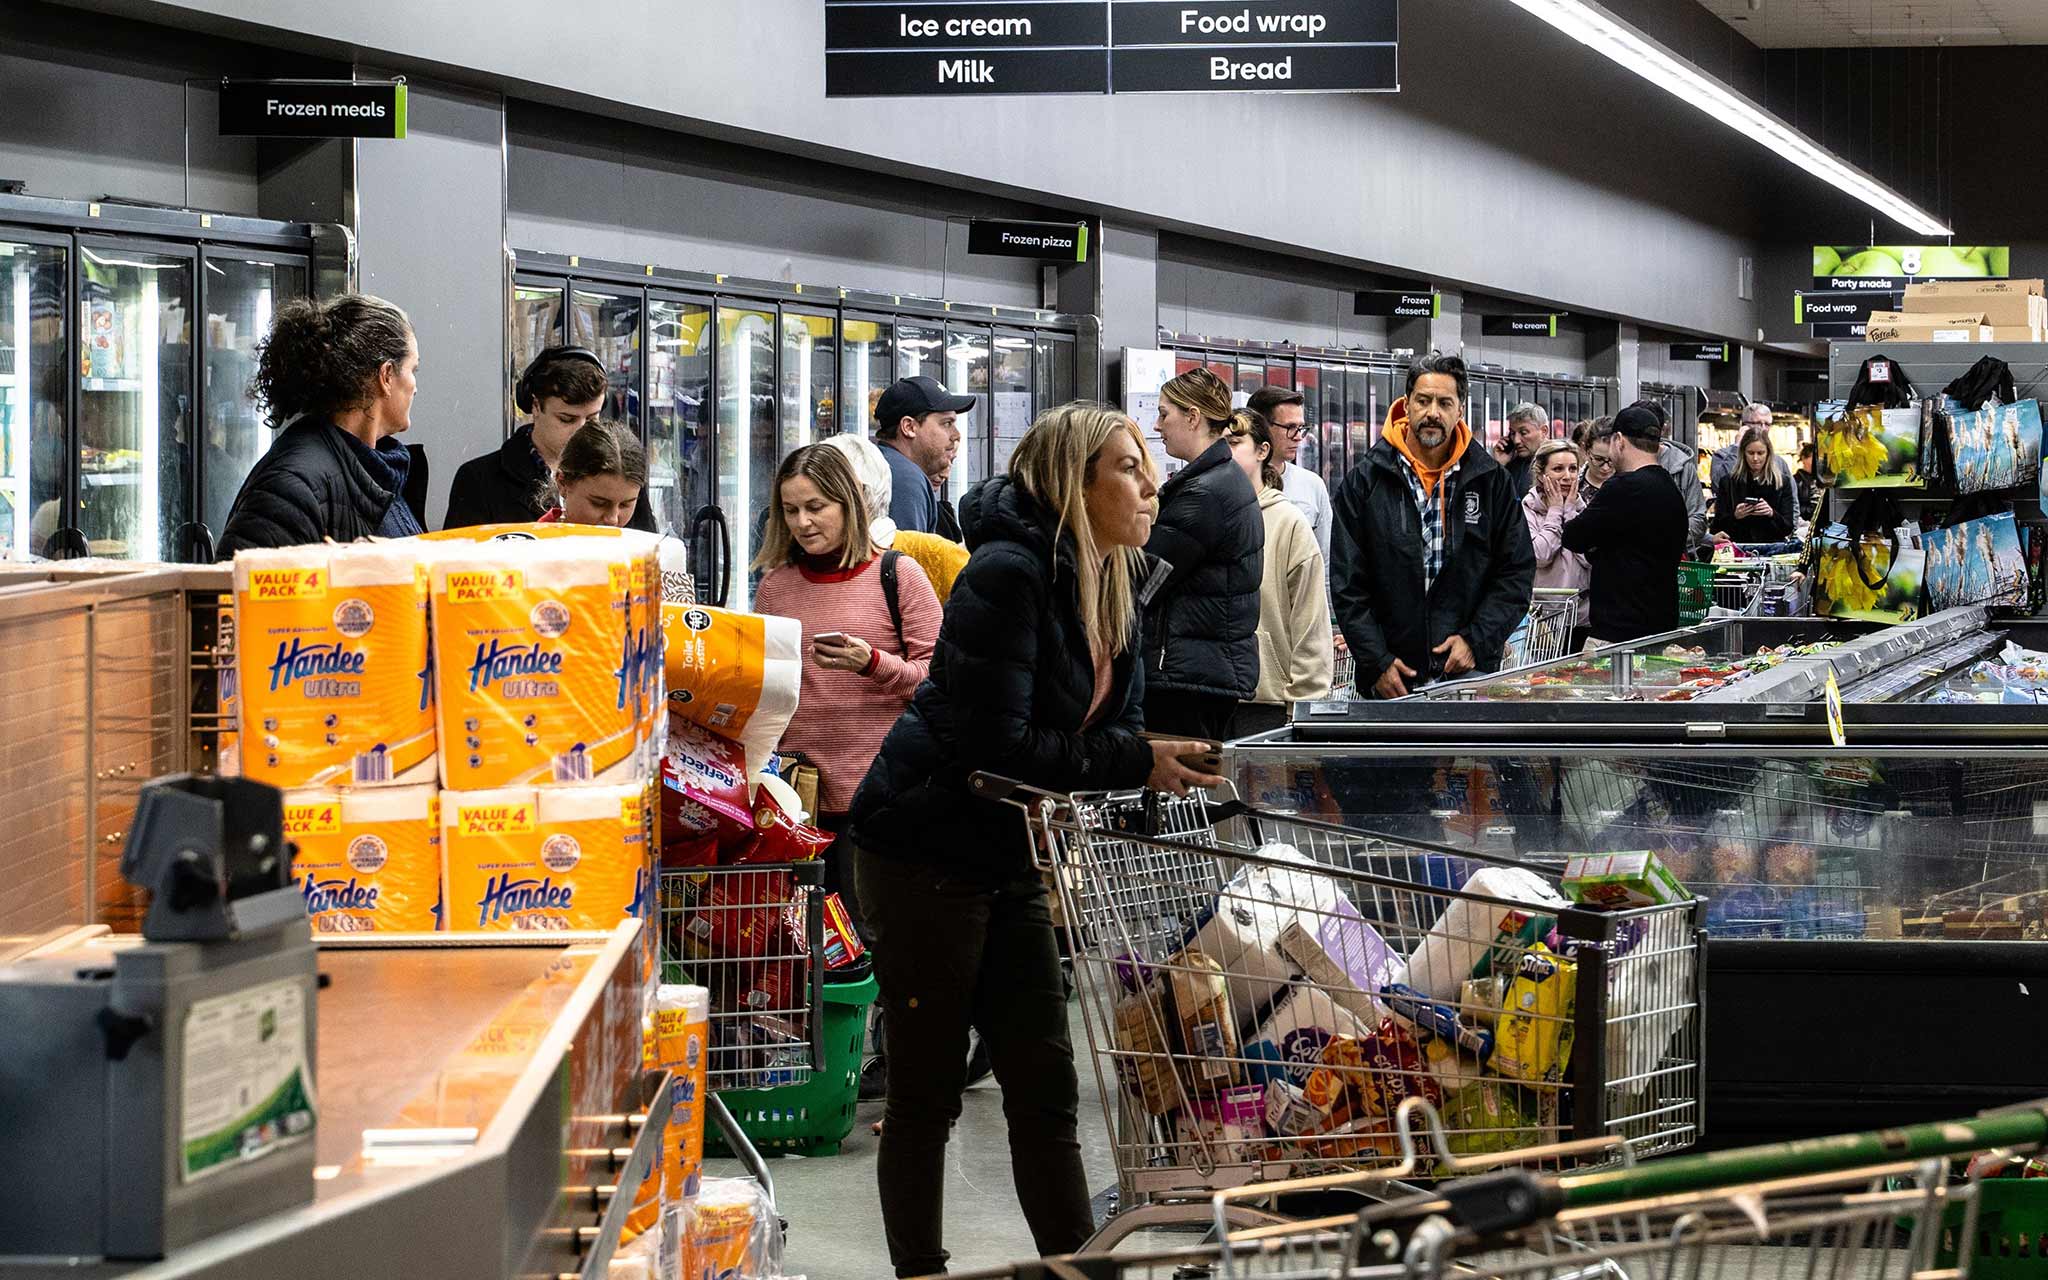 A busy supermarket aisle